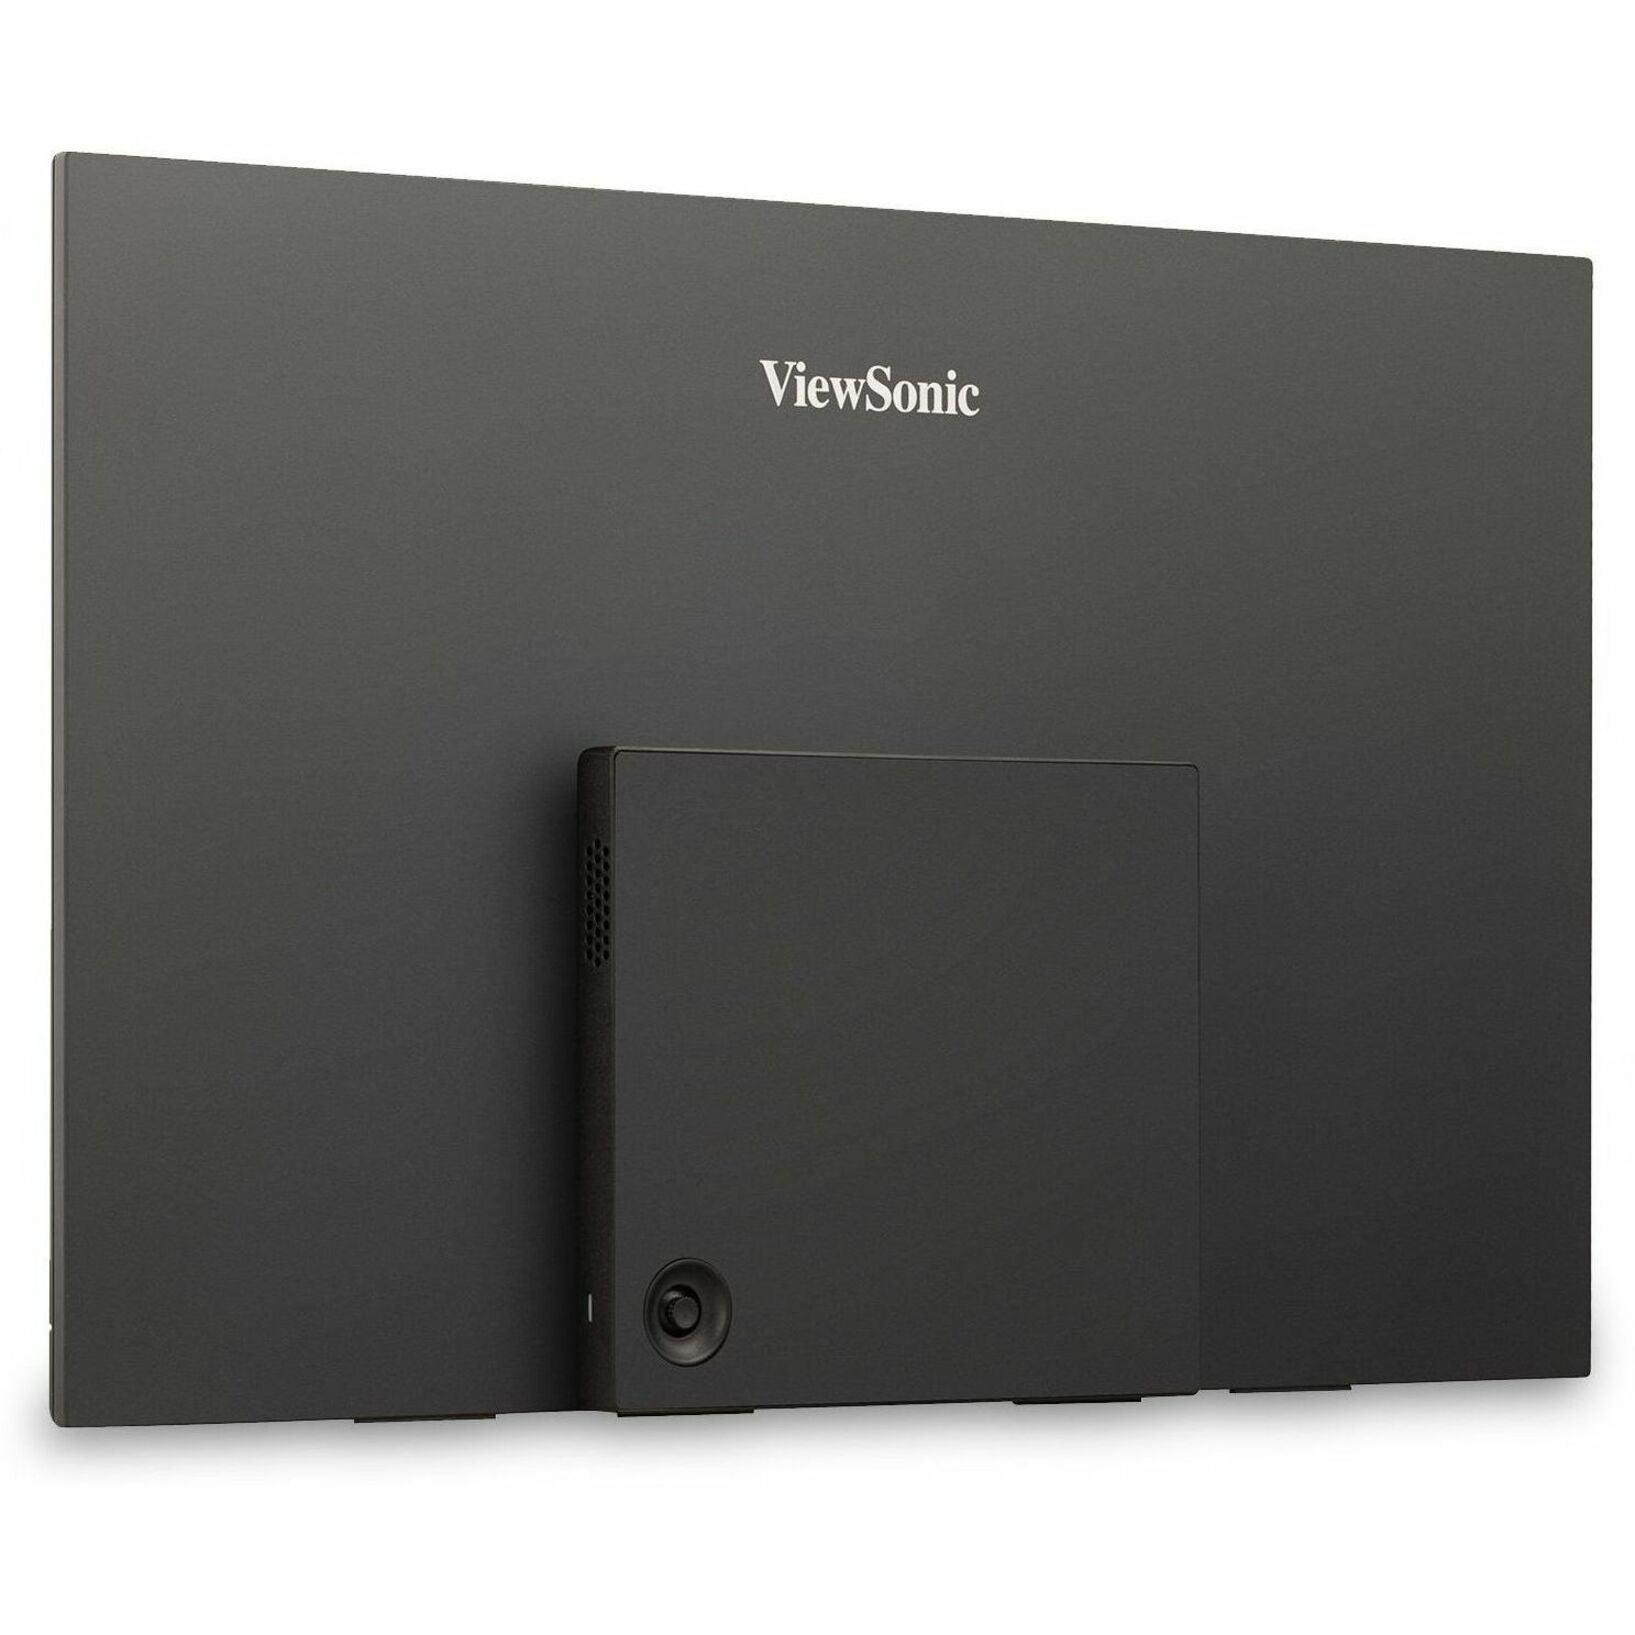 Monitor de juego LED ViewSonic VX1655-4K Monitor portátil UHD 4K de 15.6" con USB C de 60W y mini HDMI. Marca: ViewSonic.